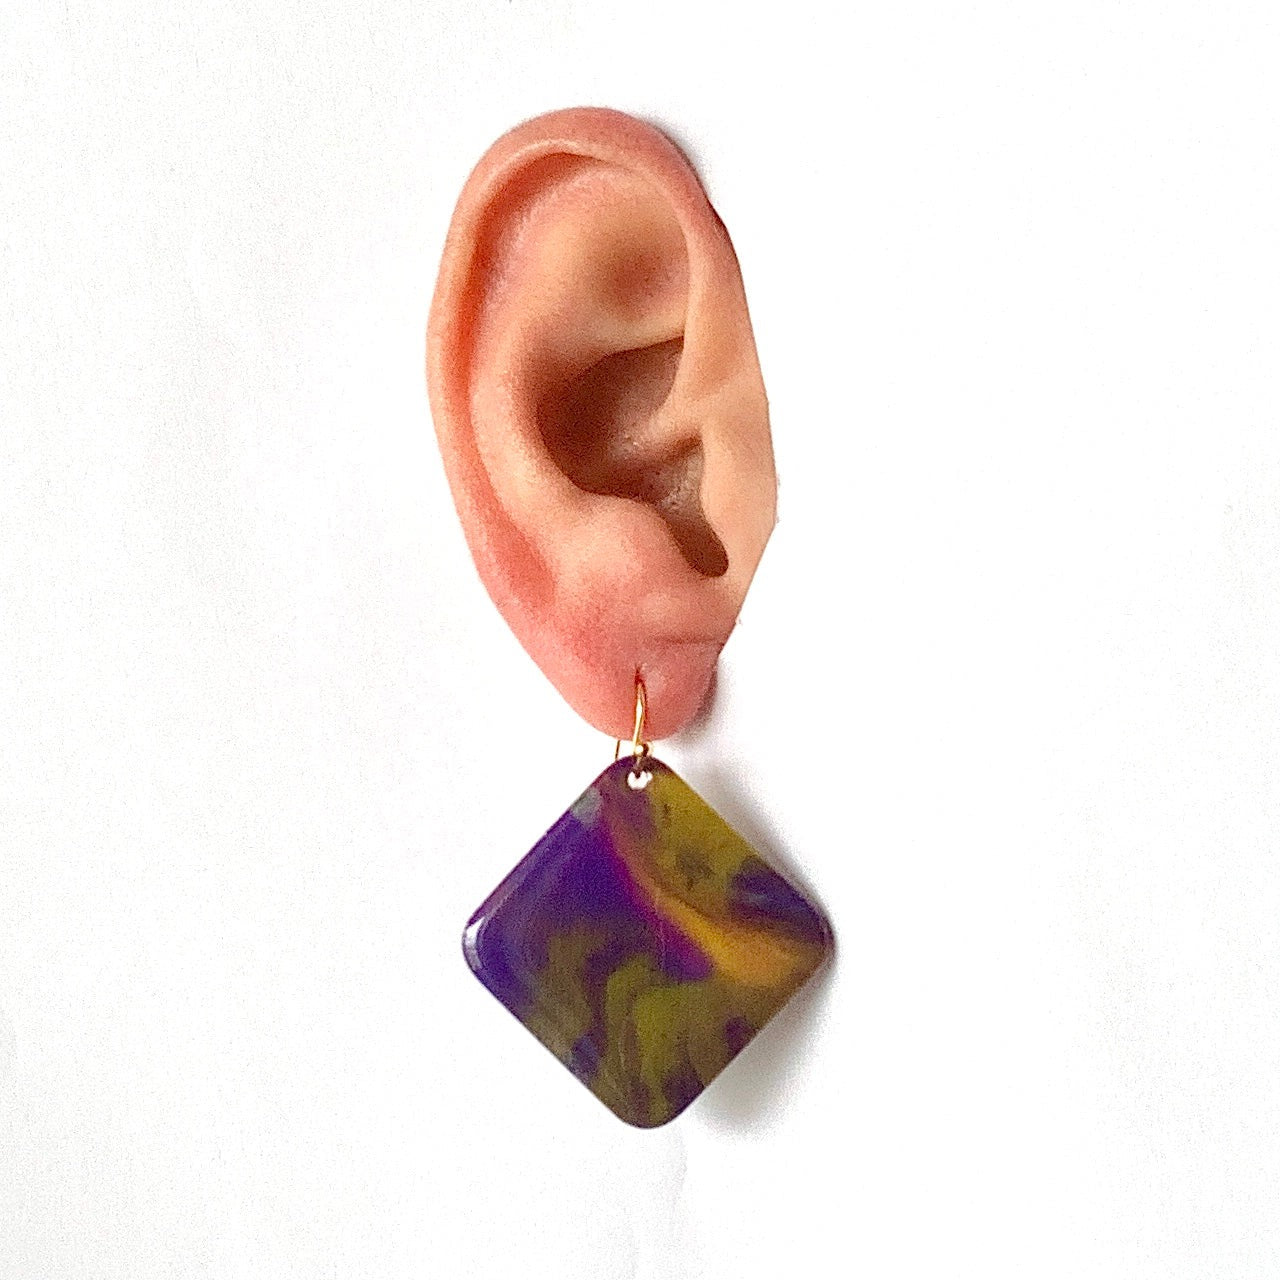 square diamond earrings dangling drop earrings handmade from recycled plastic purple gold yellow artesian eco friendly crocuses